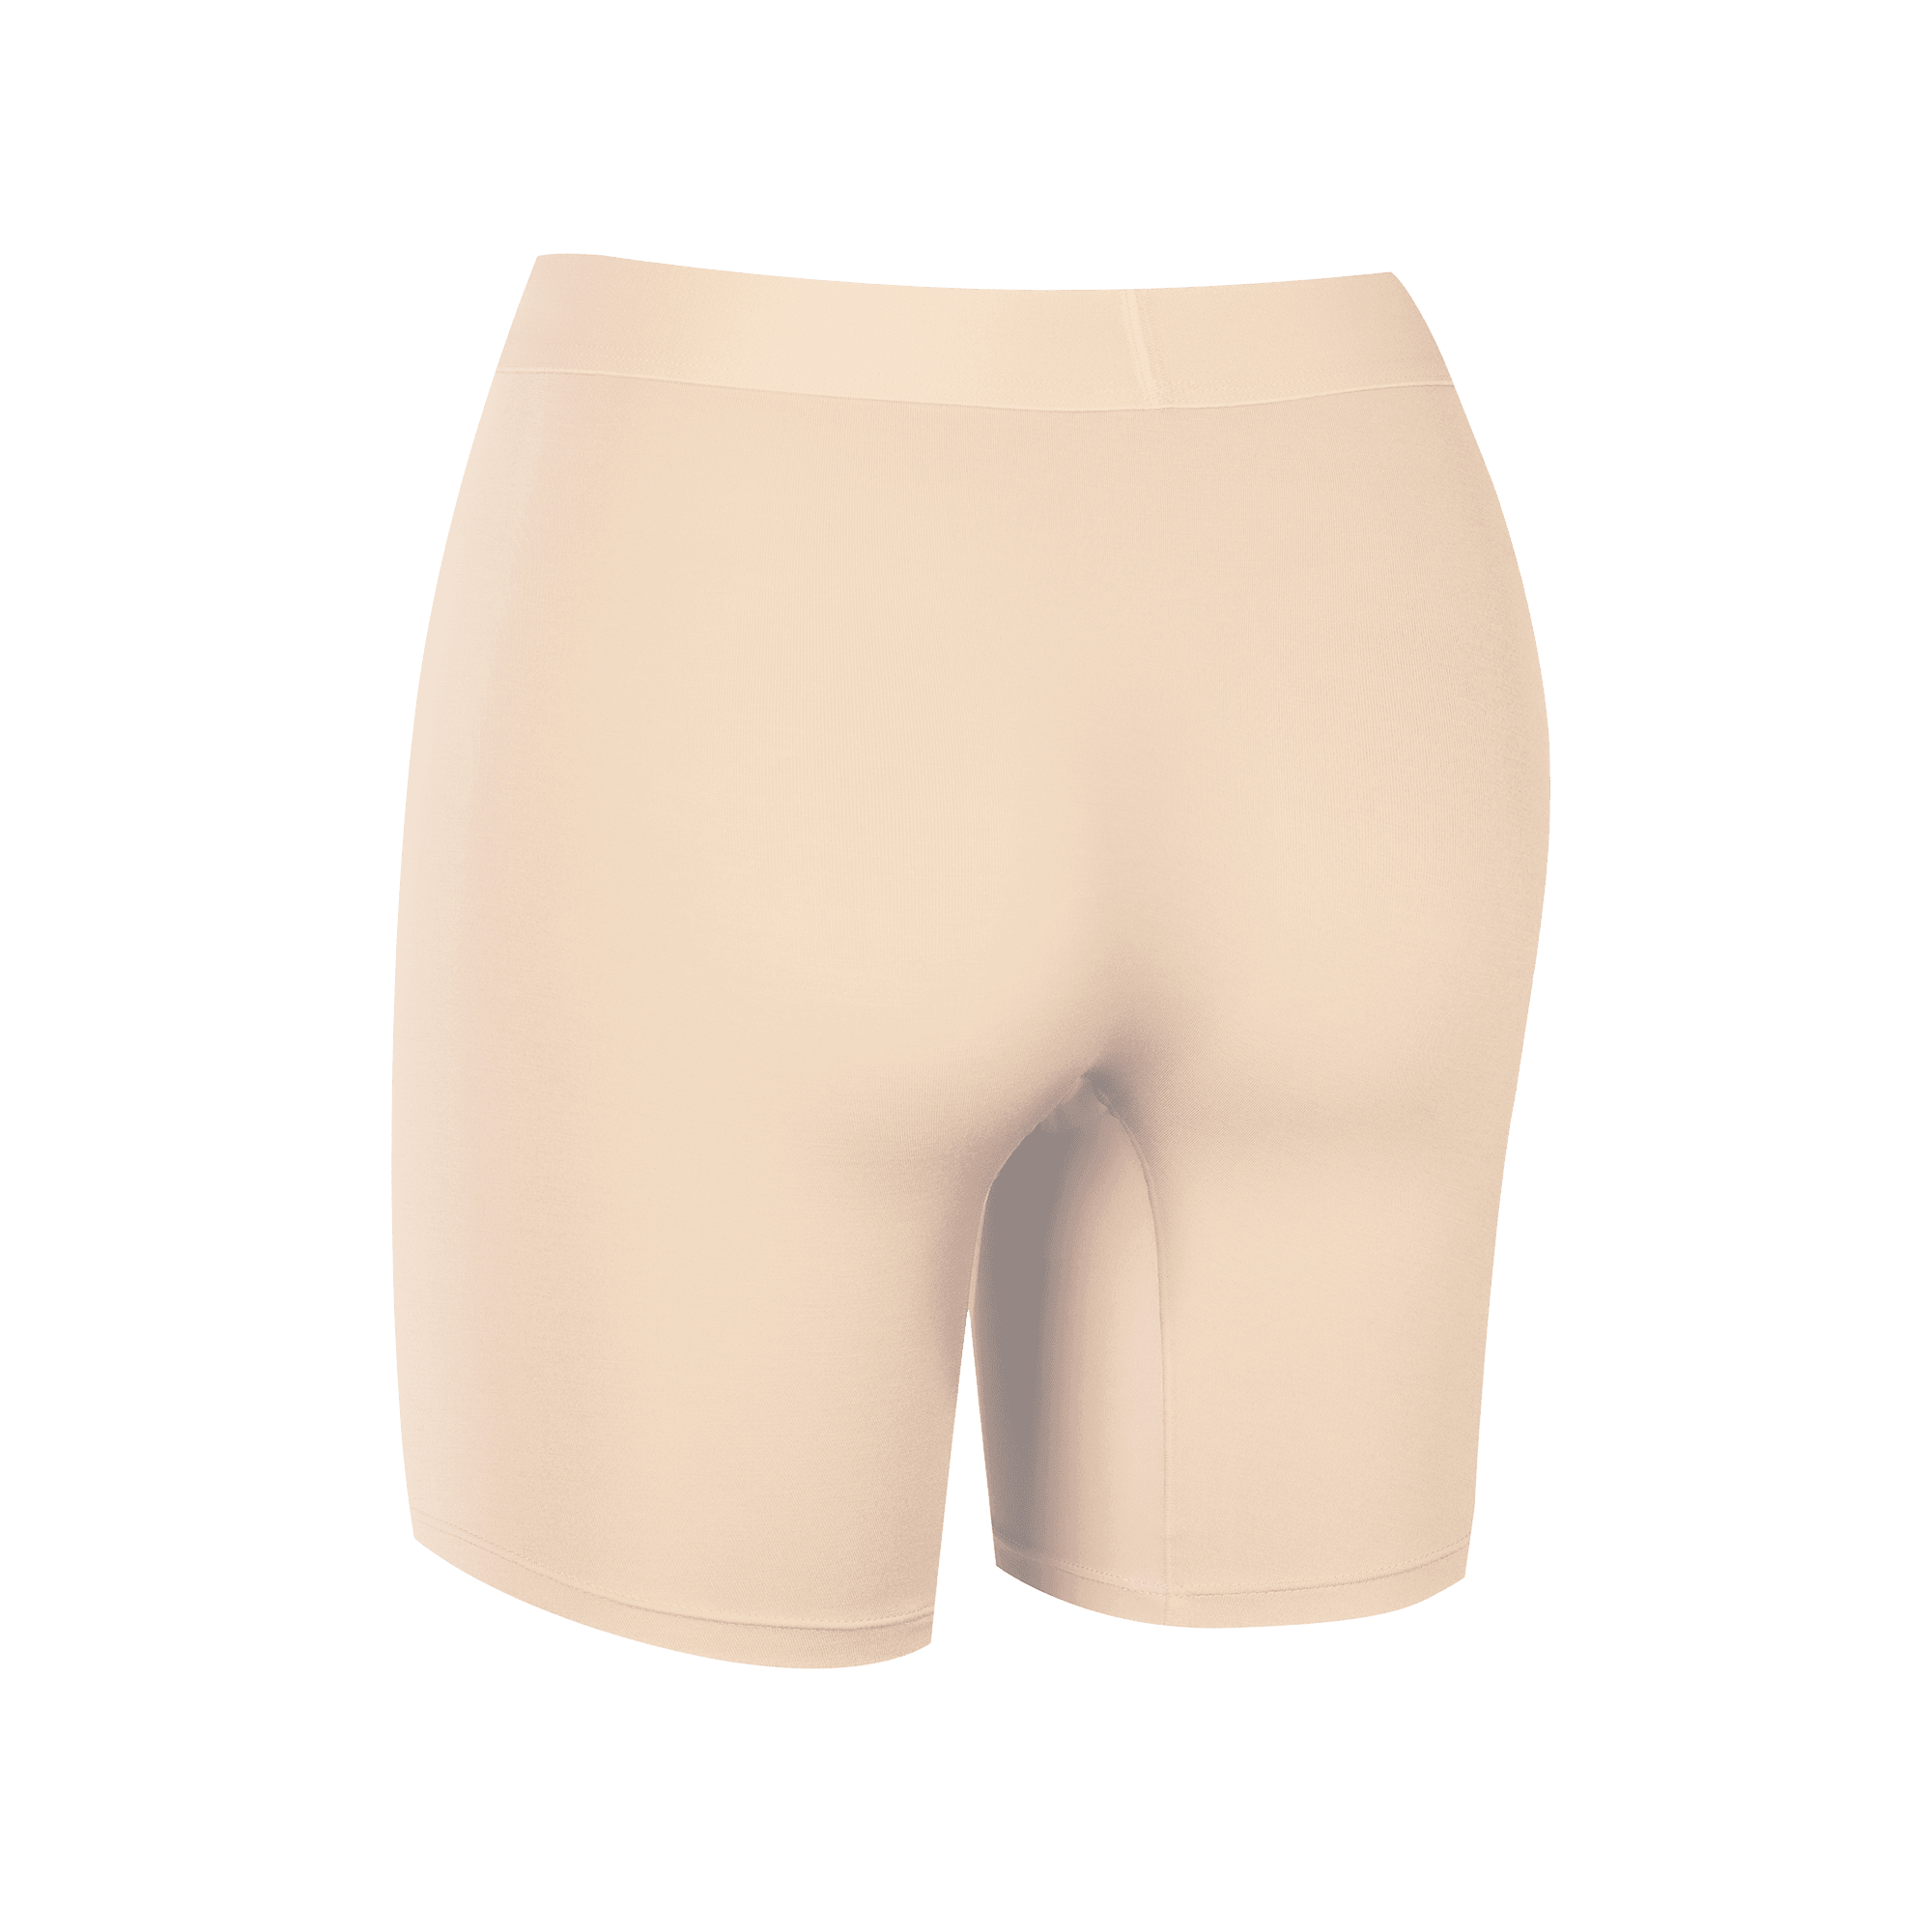 Women's Body Shorts - Peach